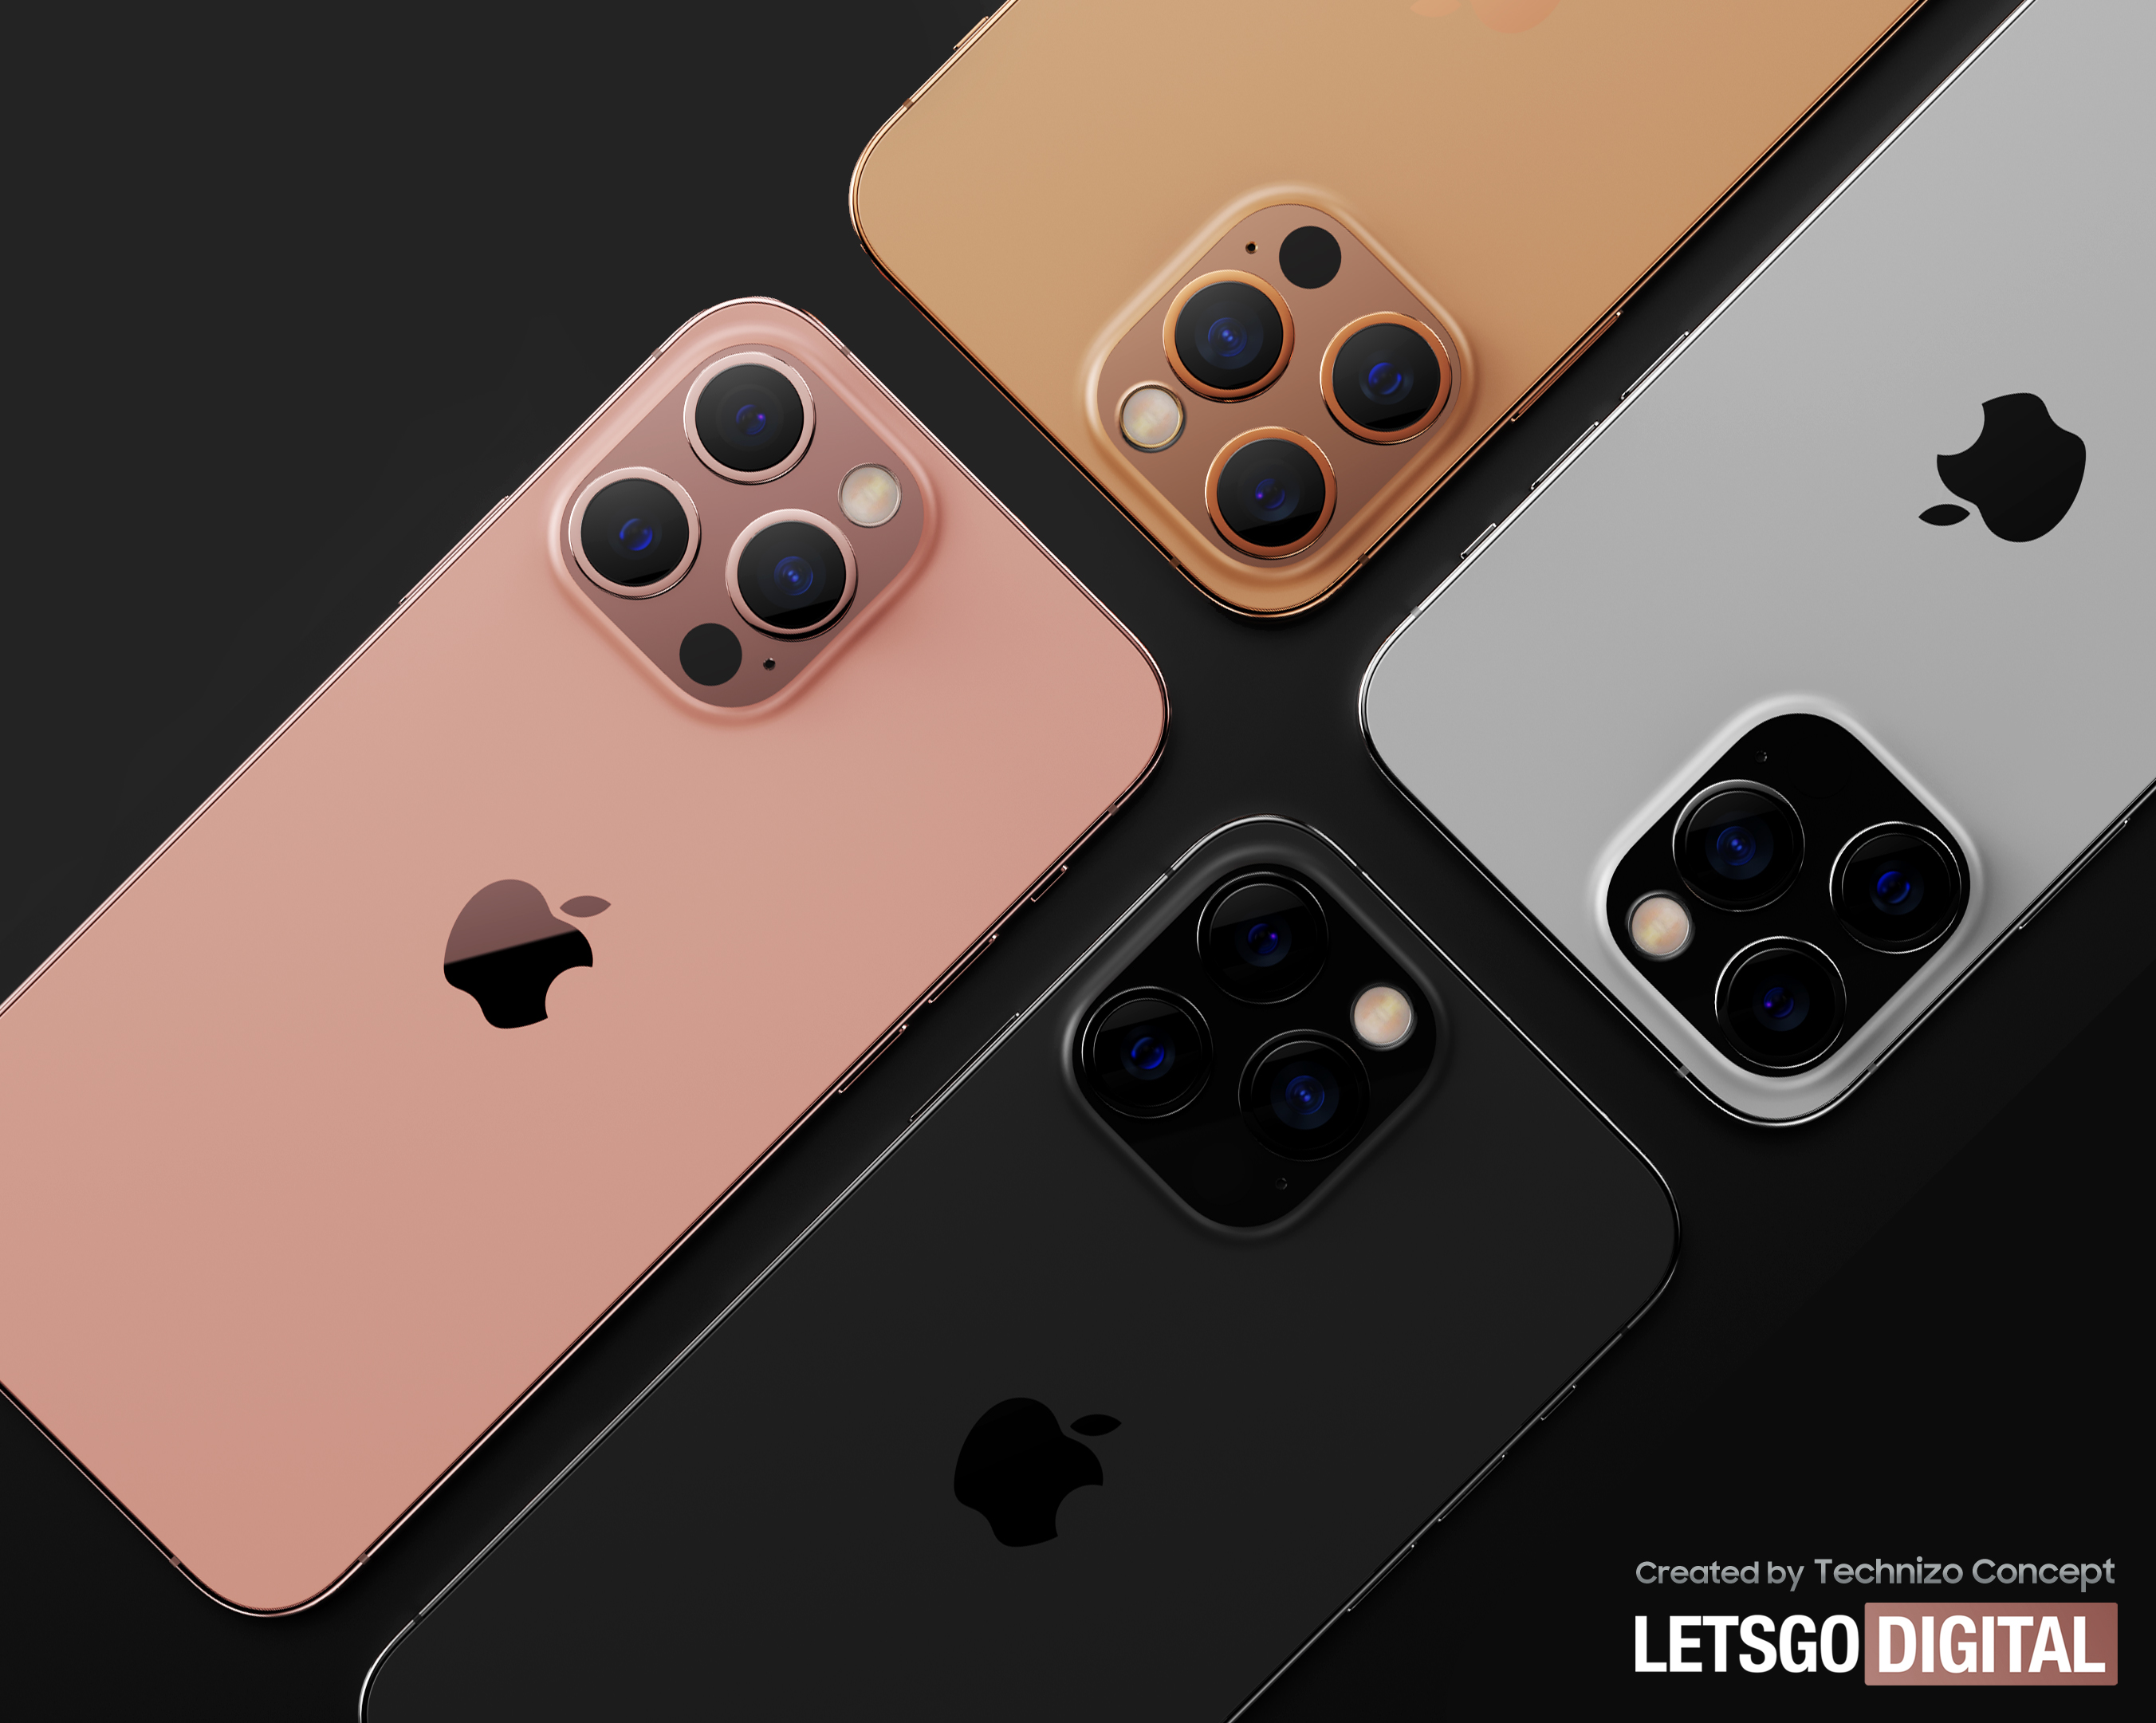 Apple iPhone 12s Pro colors